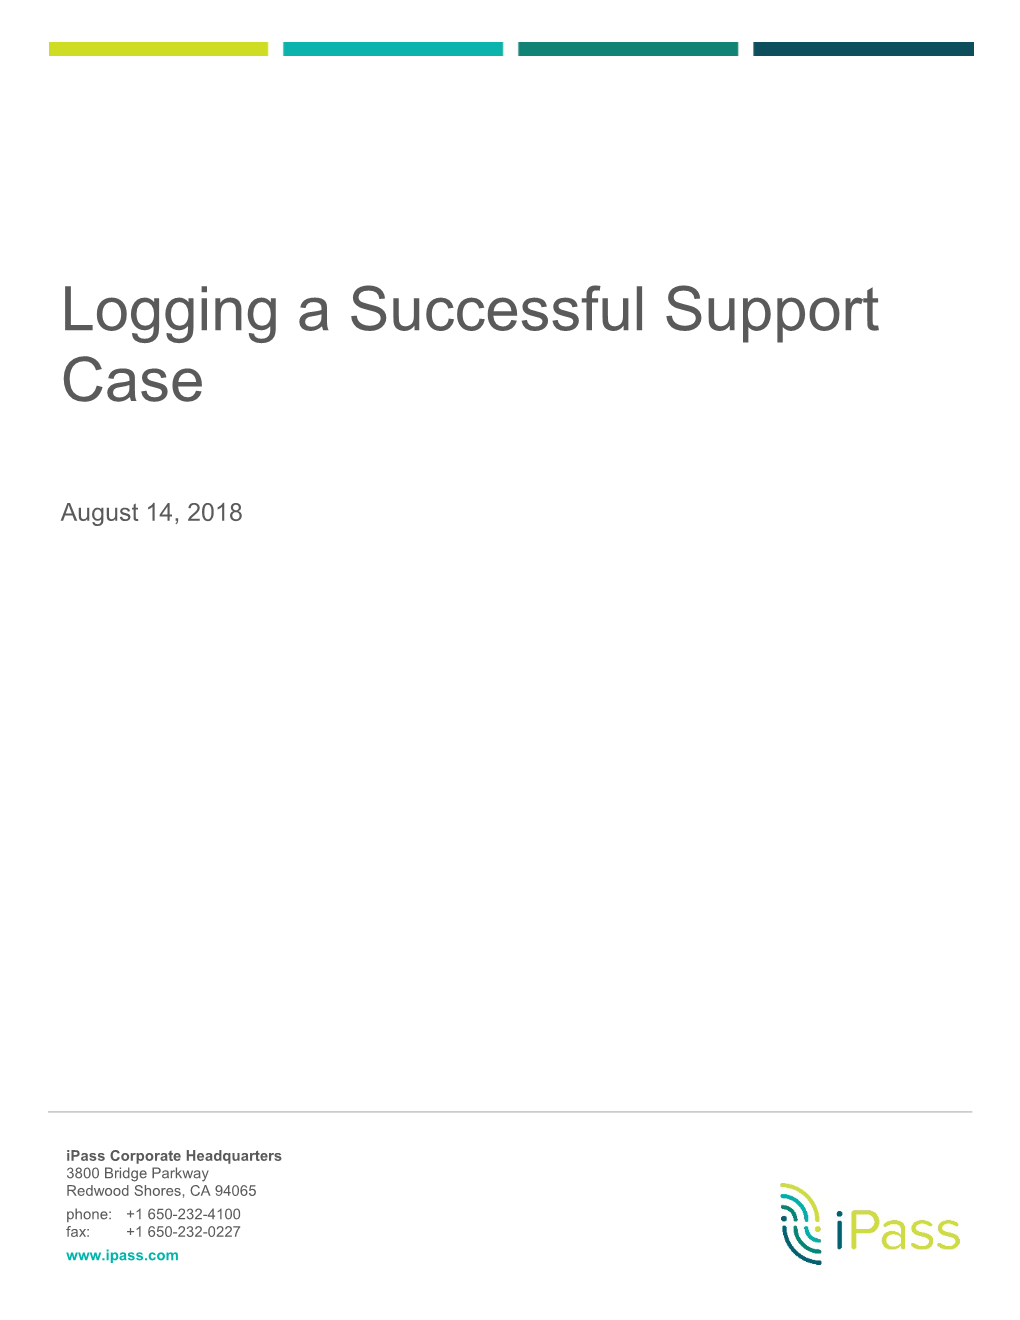 Logging a Successful Support Case